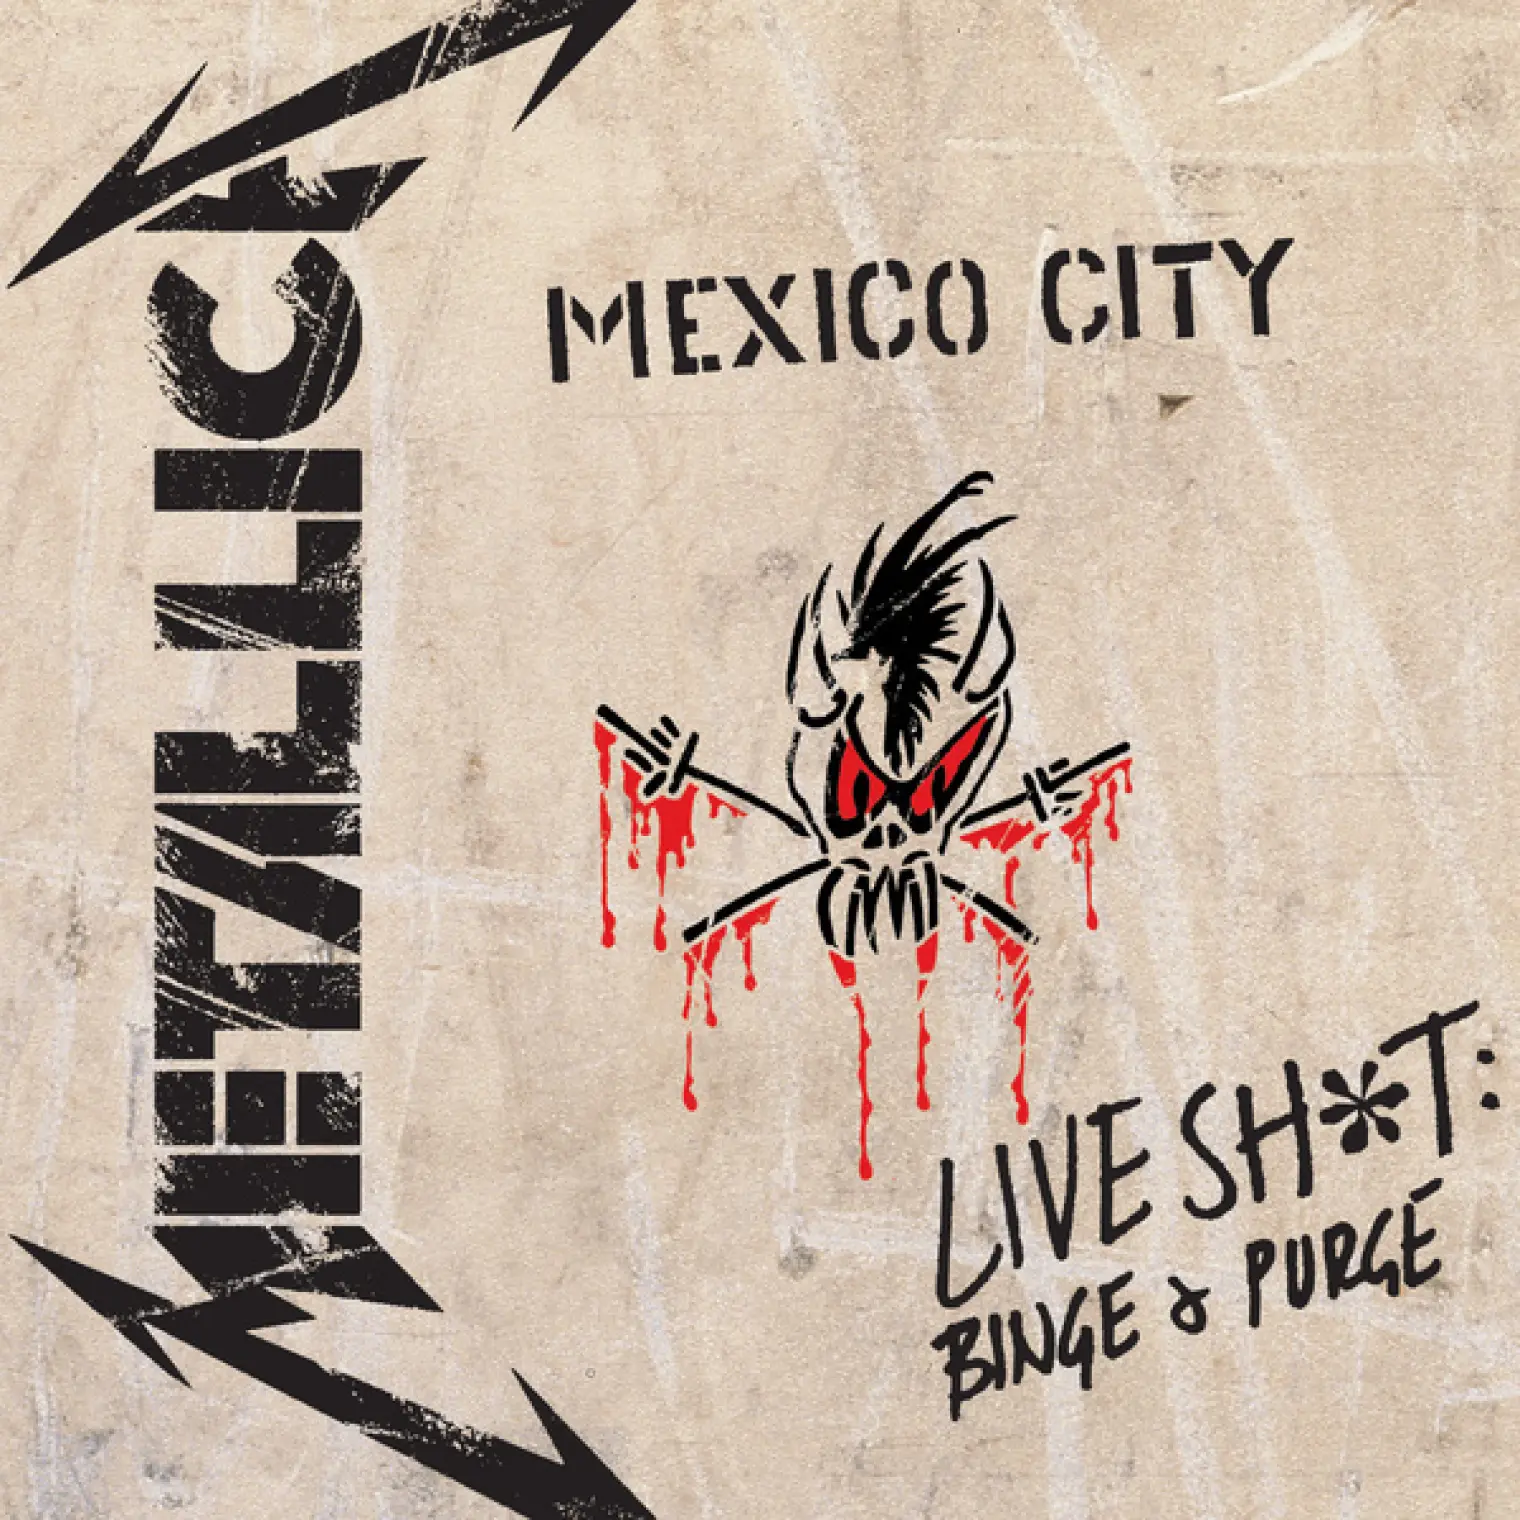 Live Sh*t: Binge & Purge -  Metallica 